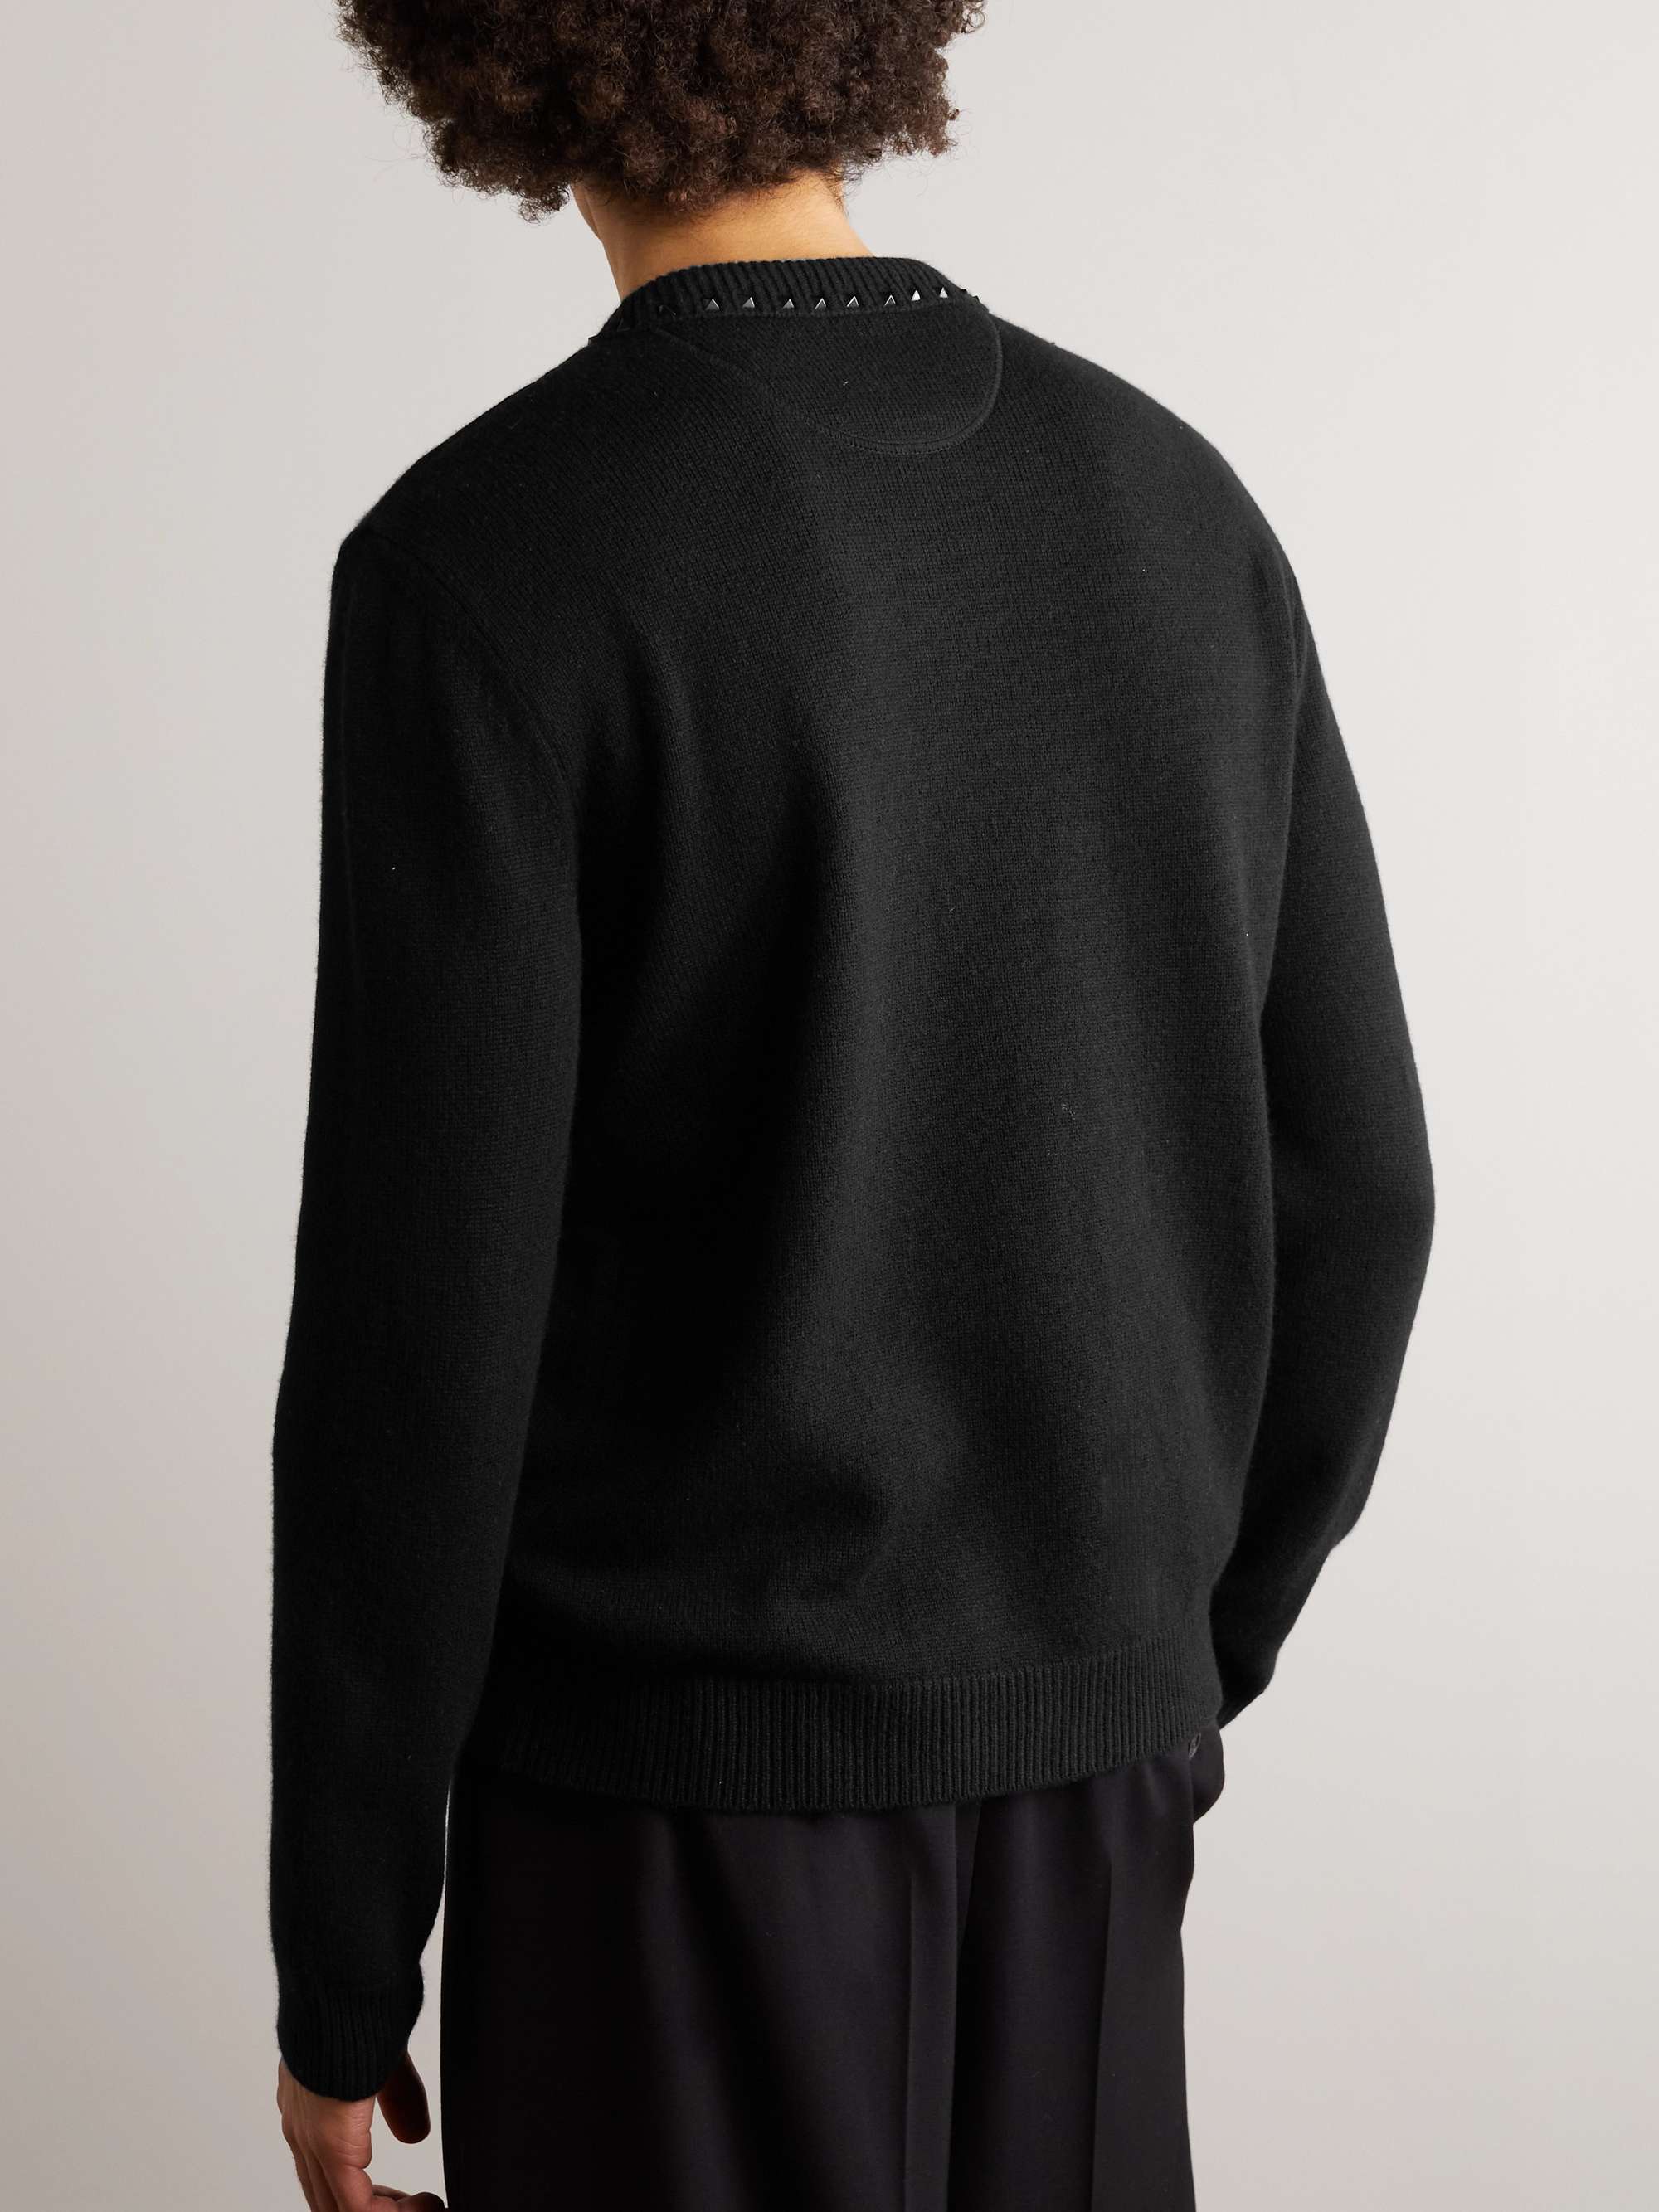 VALENTINO GARAVANI Studded Cashmere Sweater